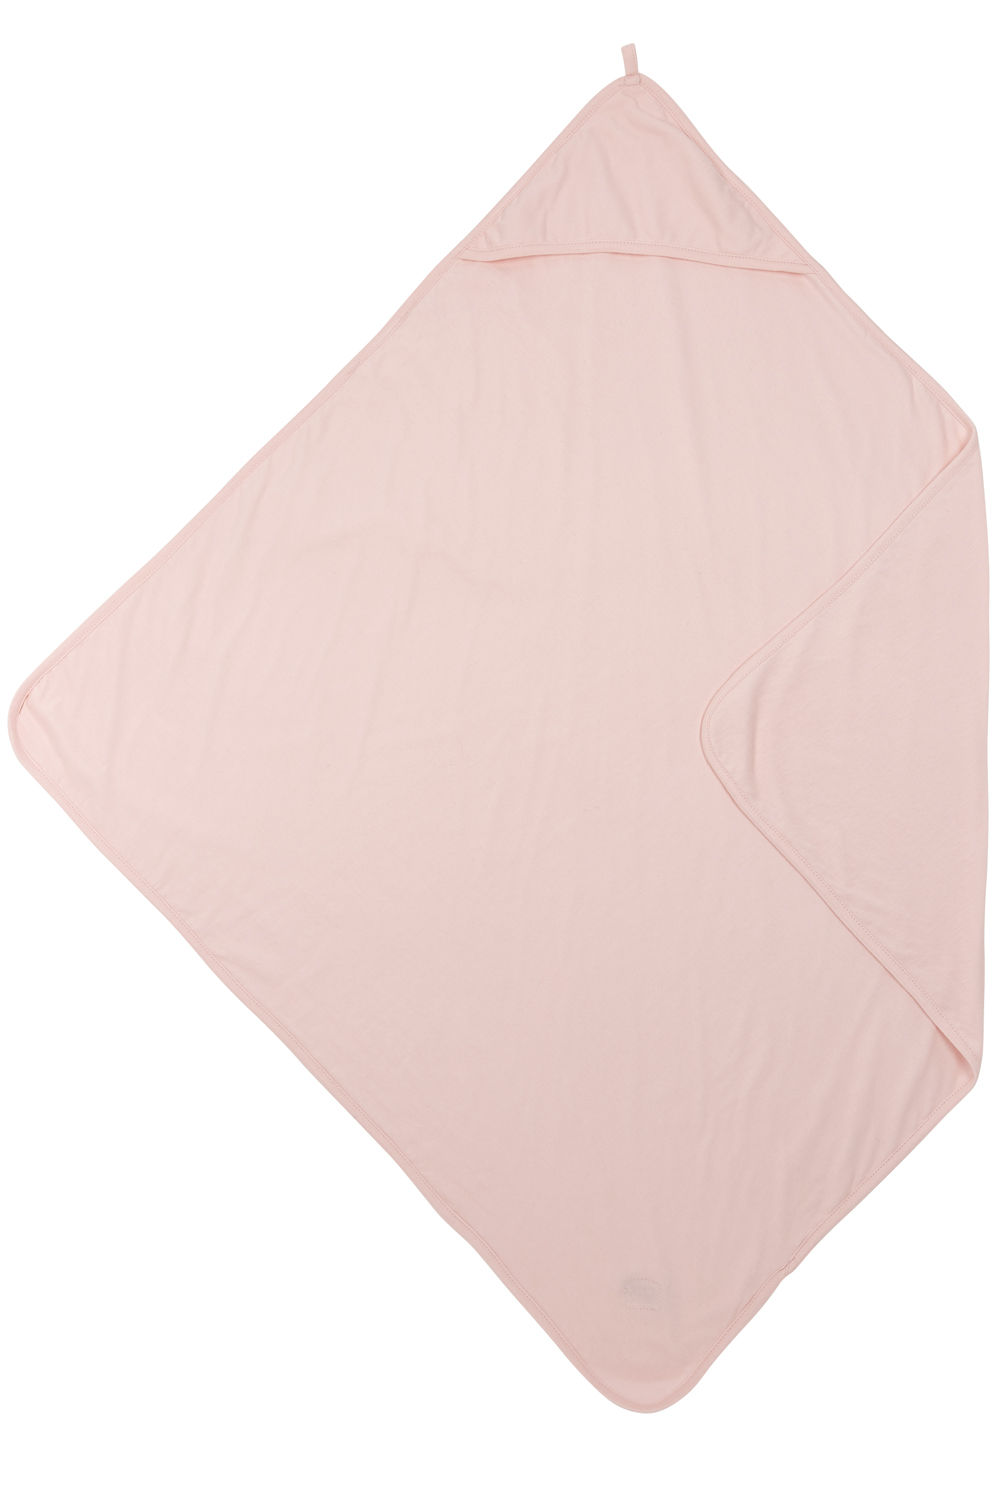 Badcape Uni - light pink - 80x80cm